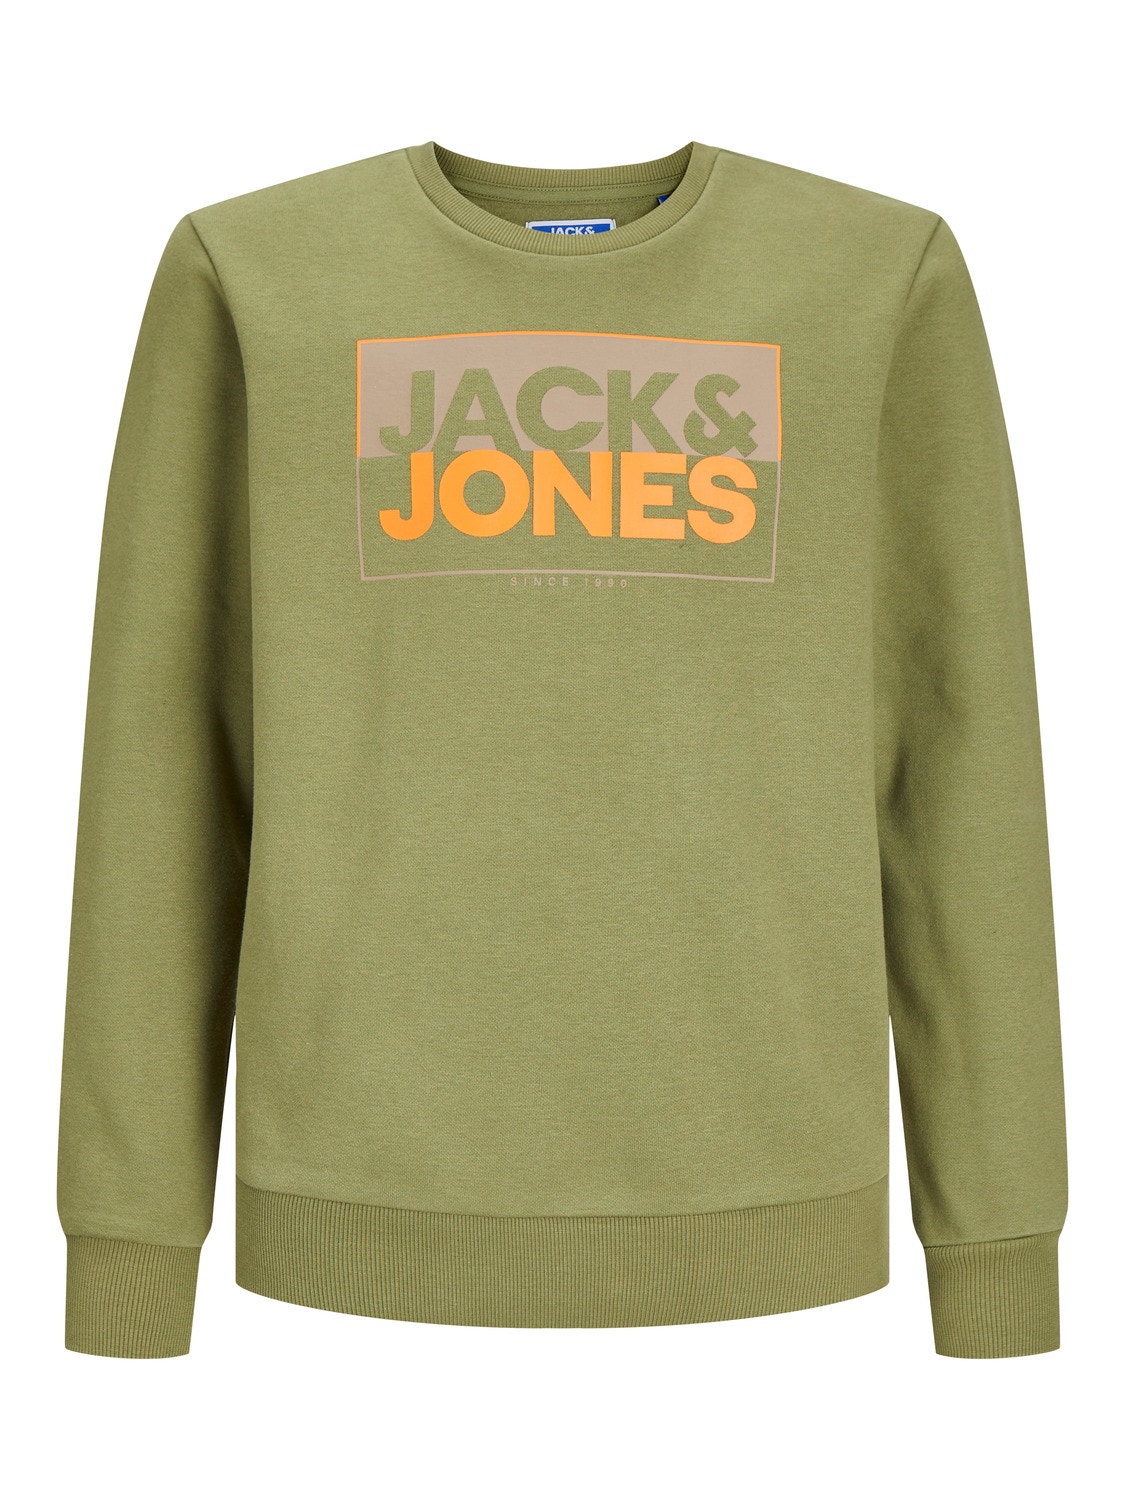 Jack & Jones Logo Crew neck Sweatshirt For boys -Olive Branch - 12251465